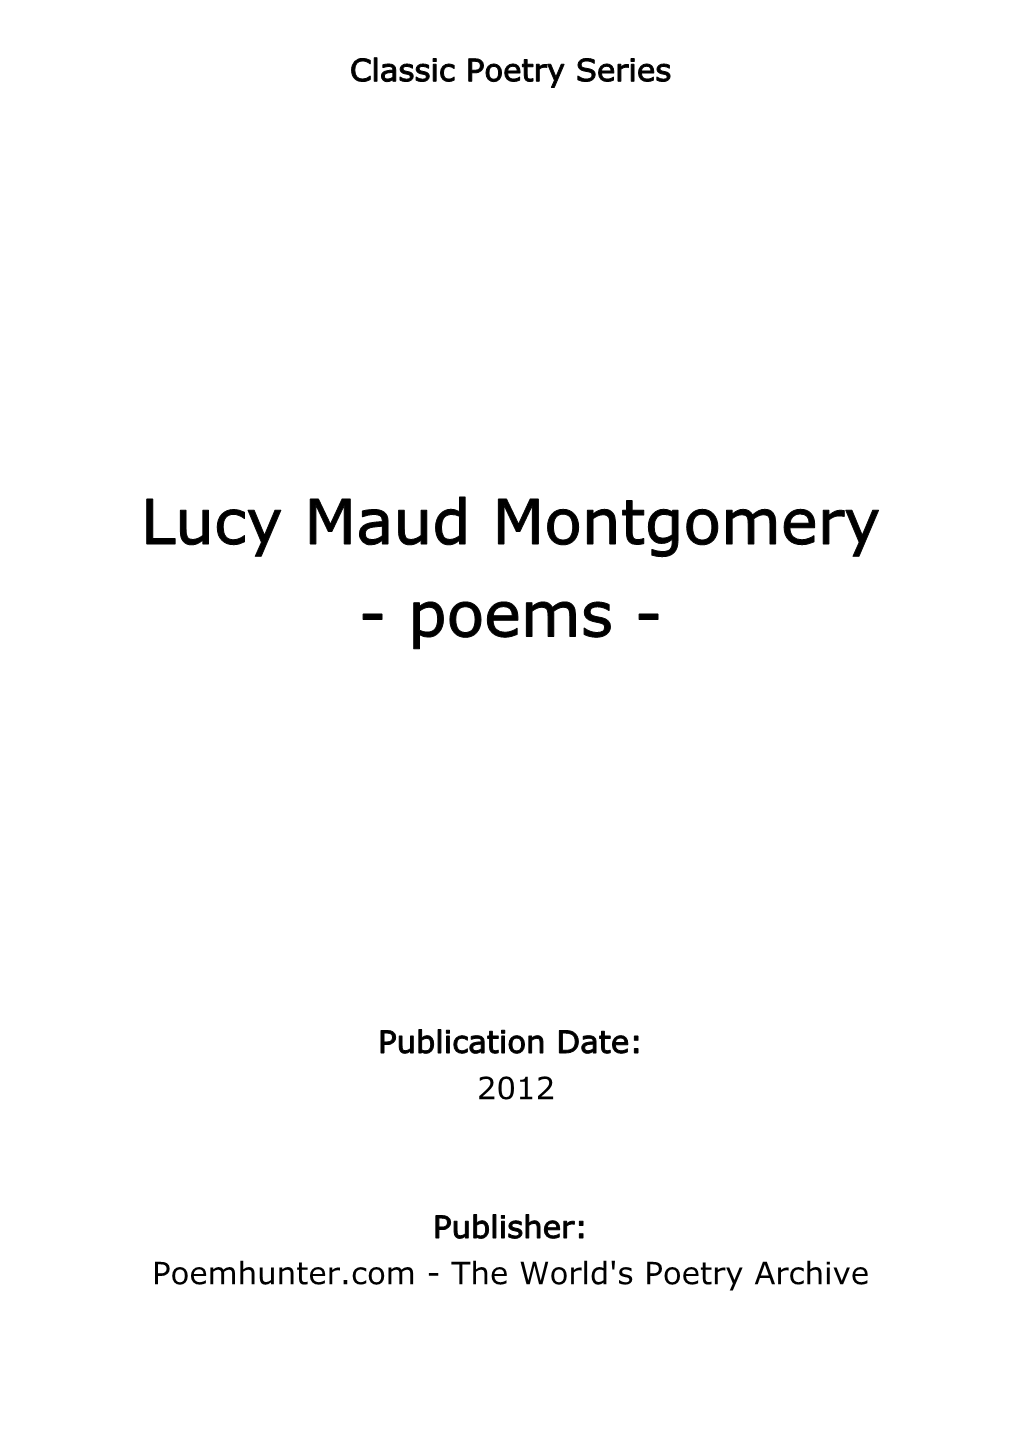 Lucy Maud Montgomery - Poems